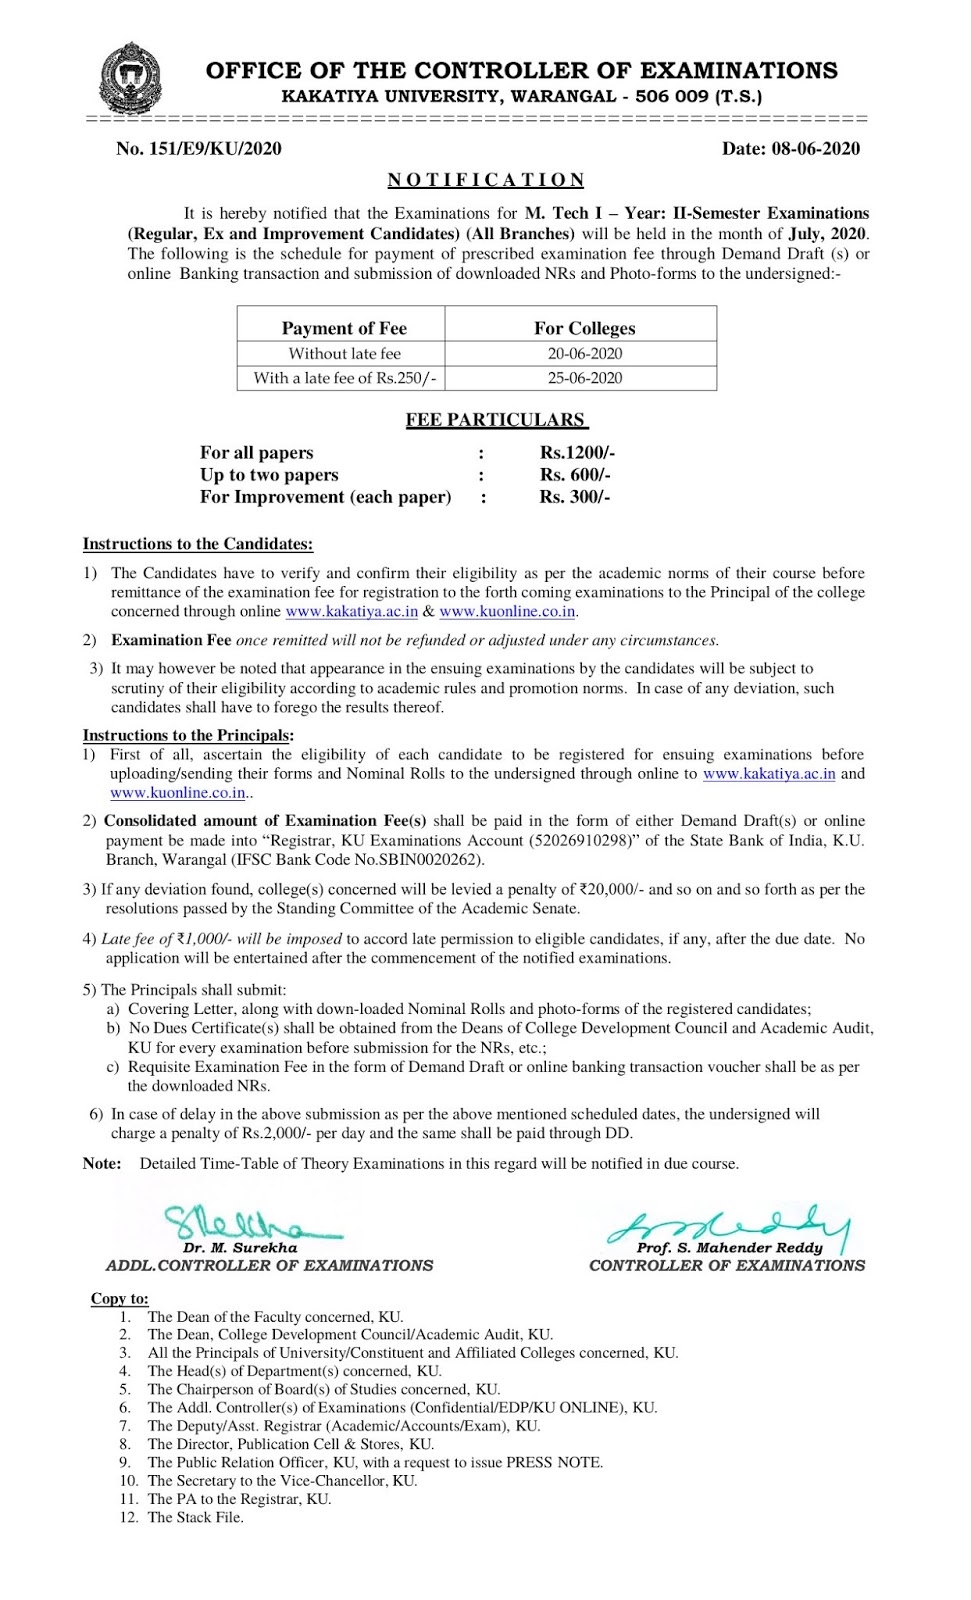 kakatiya university m.tech 1st year 2nd sem july 2020 exam fee notification